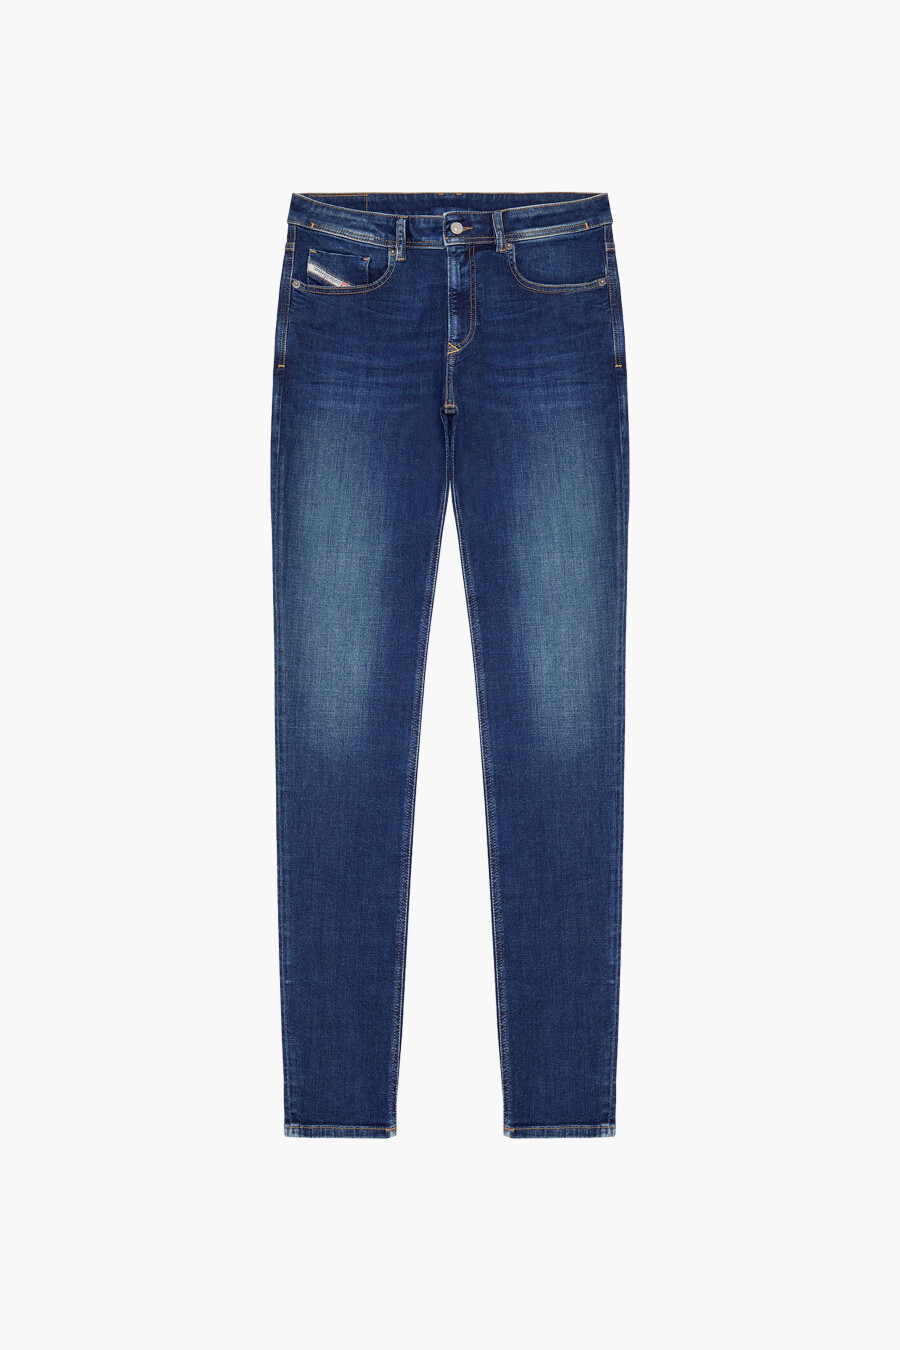 Diesel Industry Stretch jeans korenblauw-azuur casual uitstraling Mode Spijkerbroeken Stretch jeans 